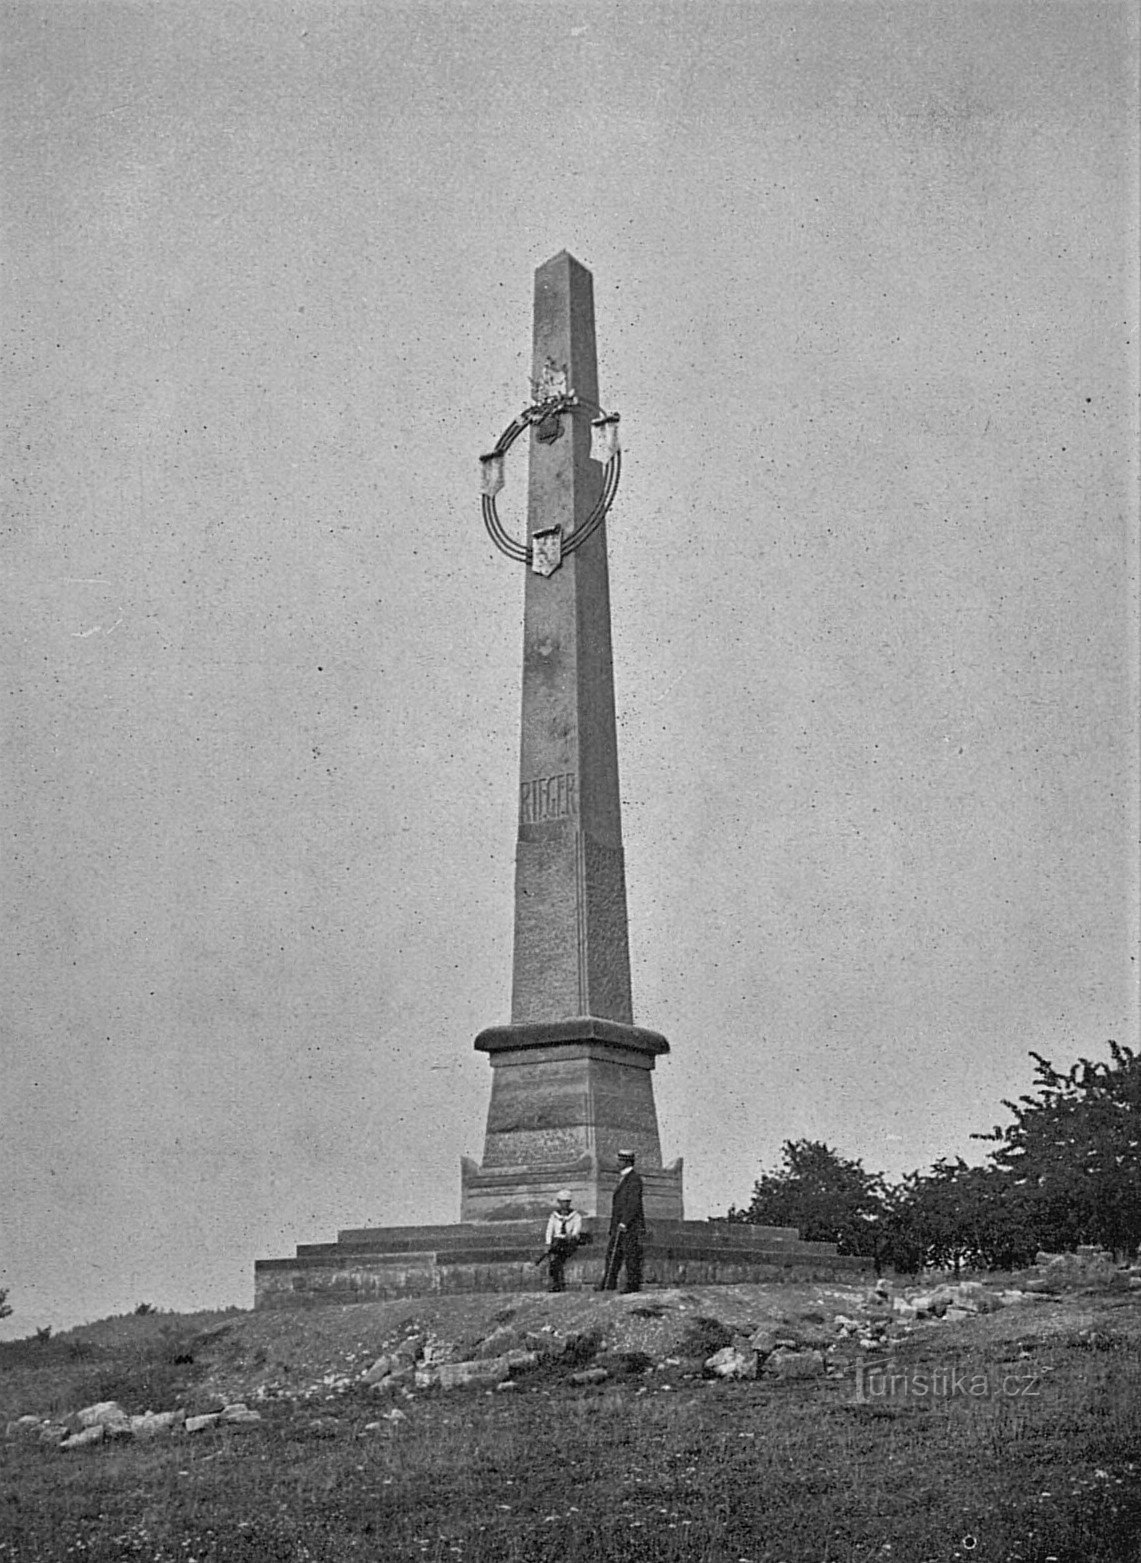 Riegr's obelisk (Hořice, 1907)